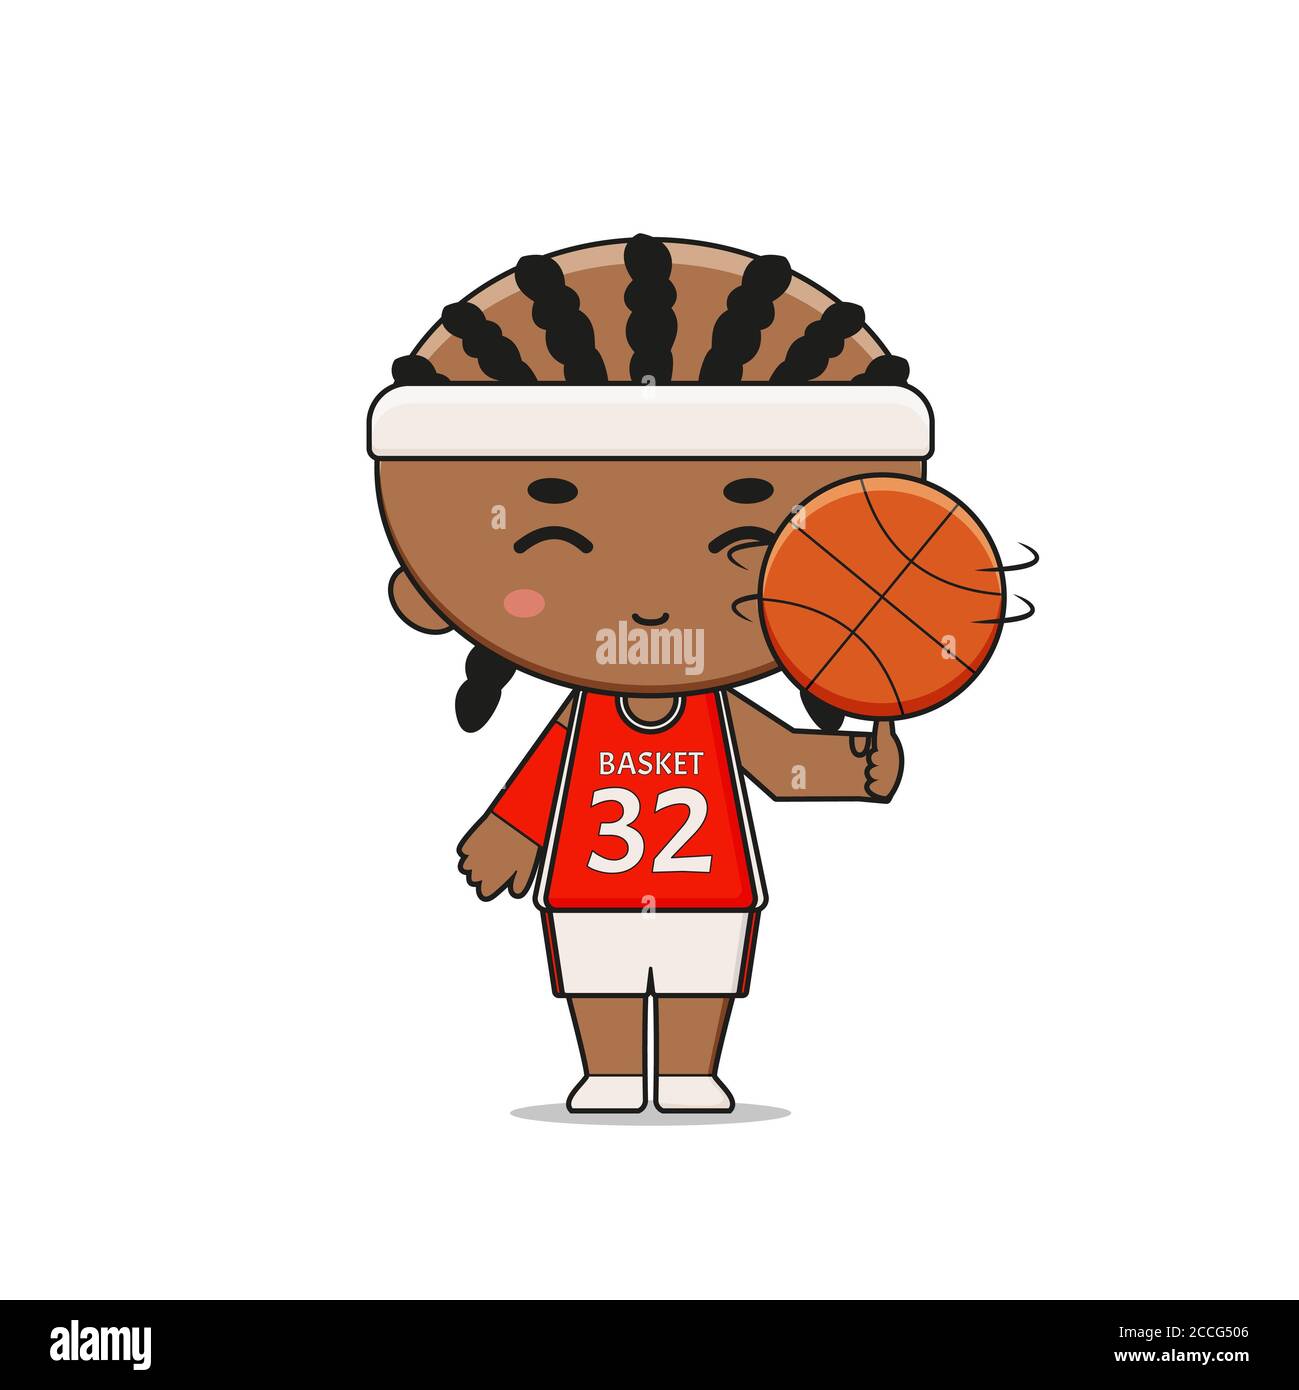 Cartoon Boy Playing Basket Ball Stock Vector - Illustration of athlete,  energy: 34606013